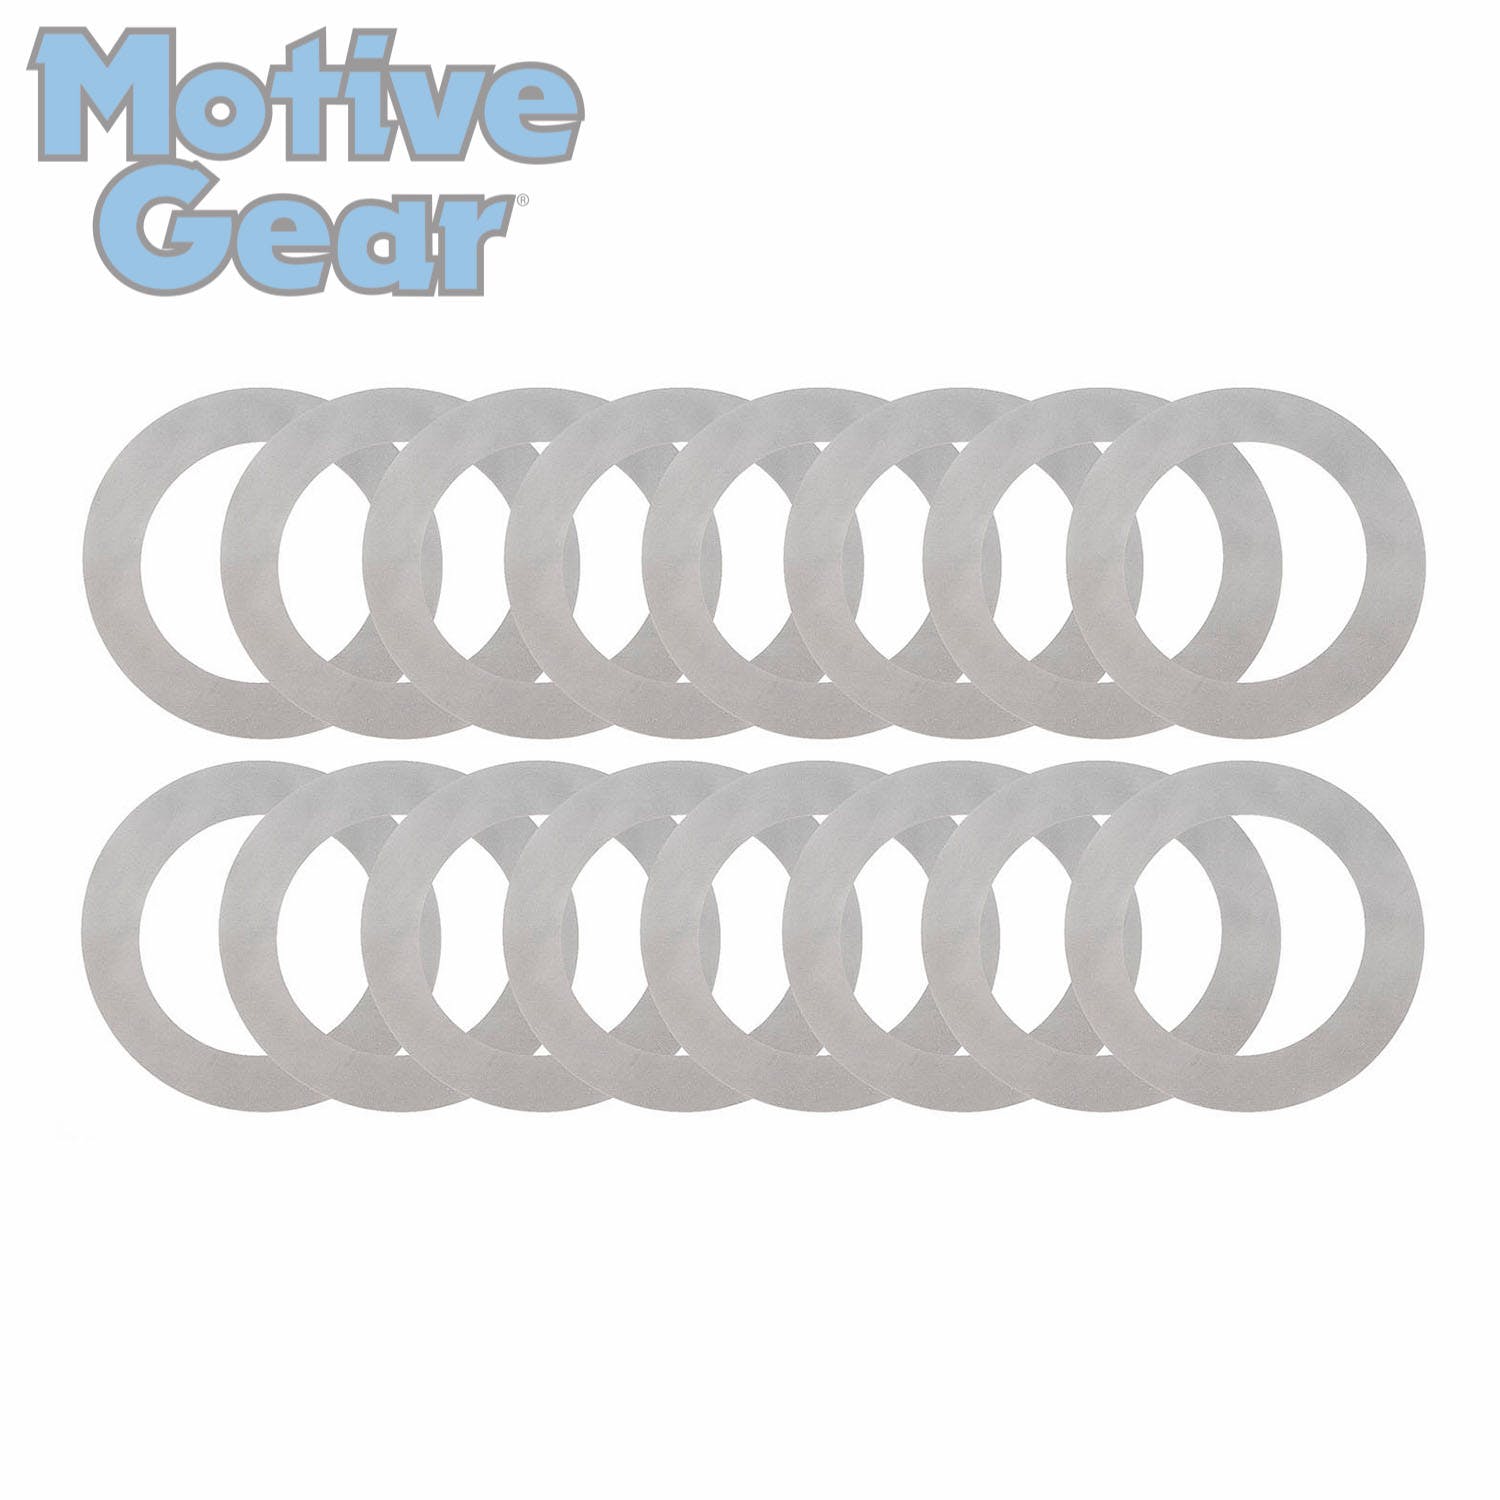 Motive Gear 1105 Differential Carrier Shim Kit